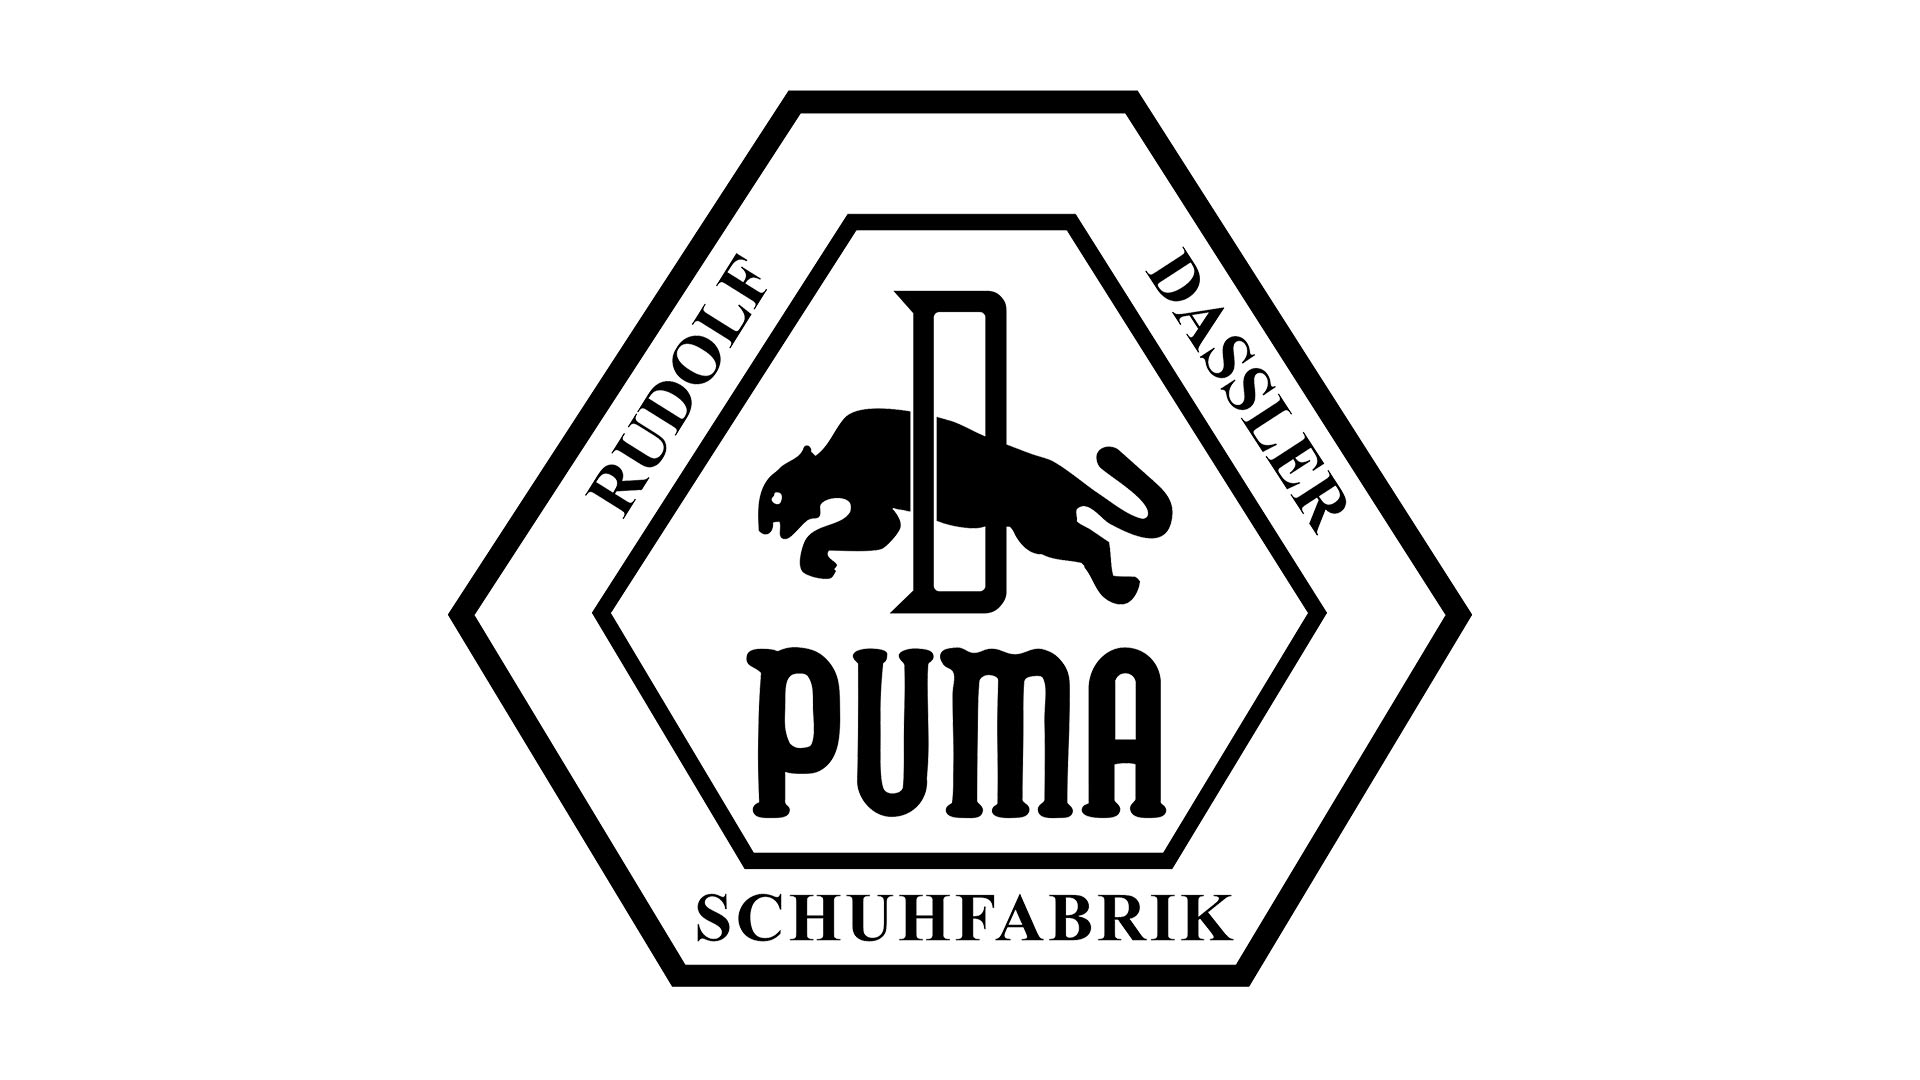 puma signification